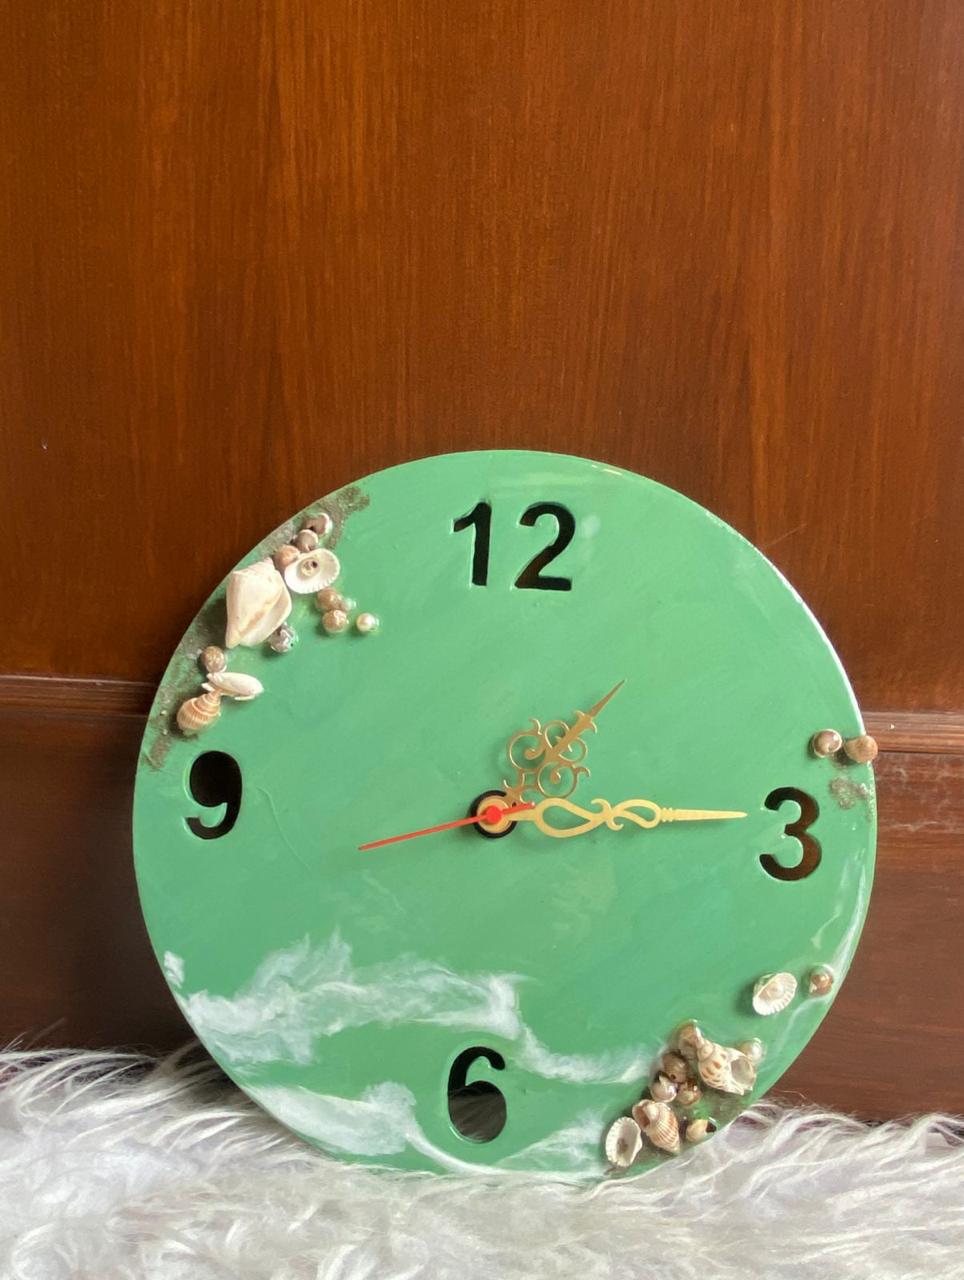 Sage Green Wall Clock